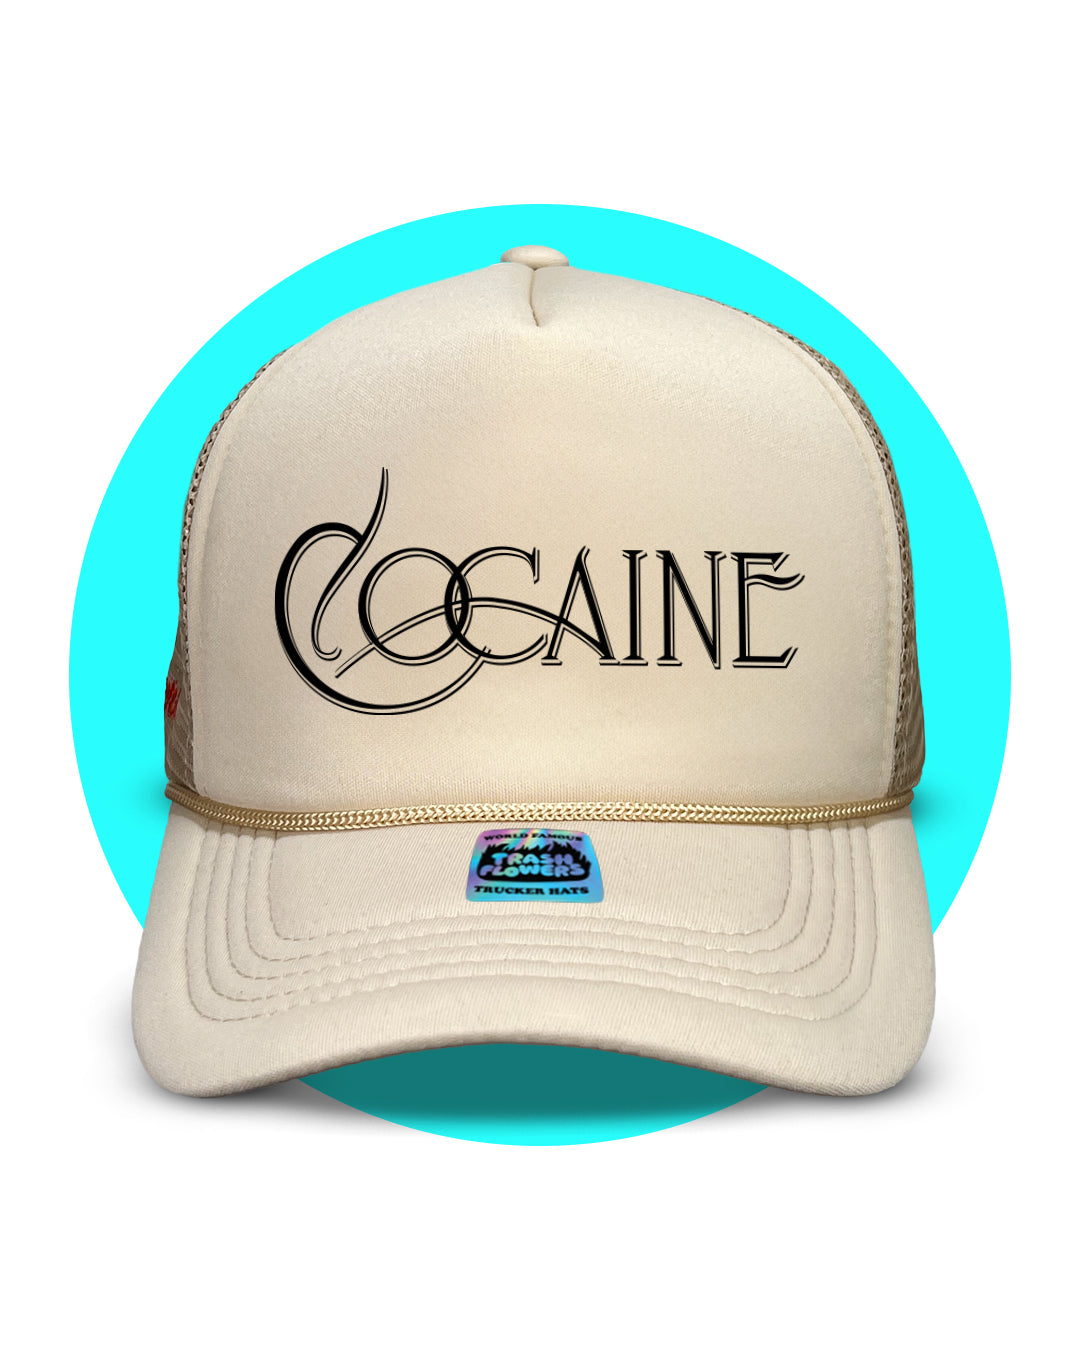 Cocaine Mac Trucker Hat